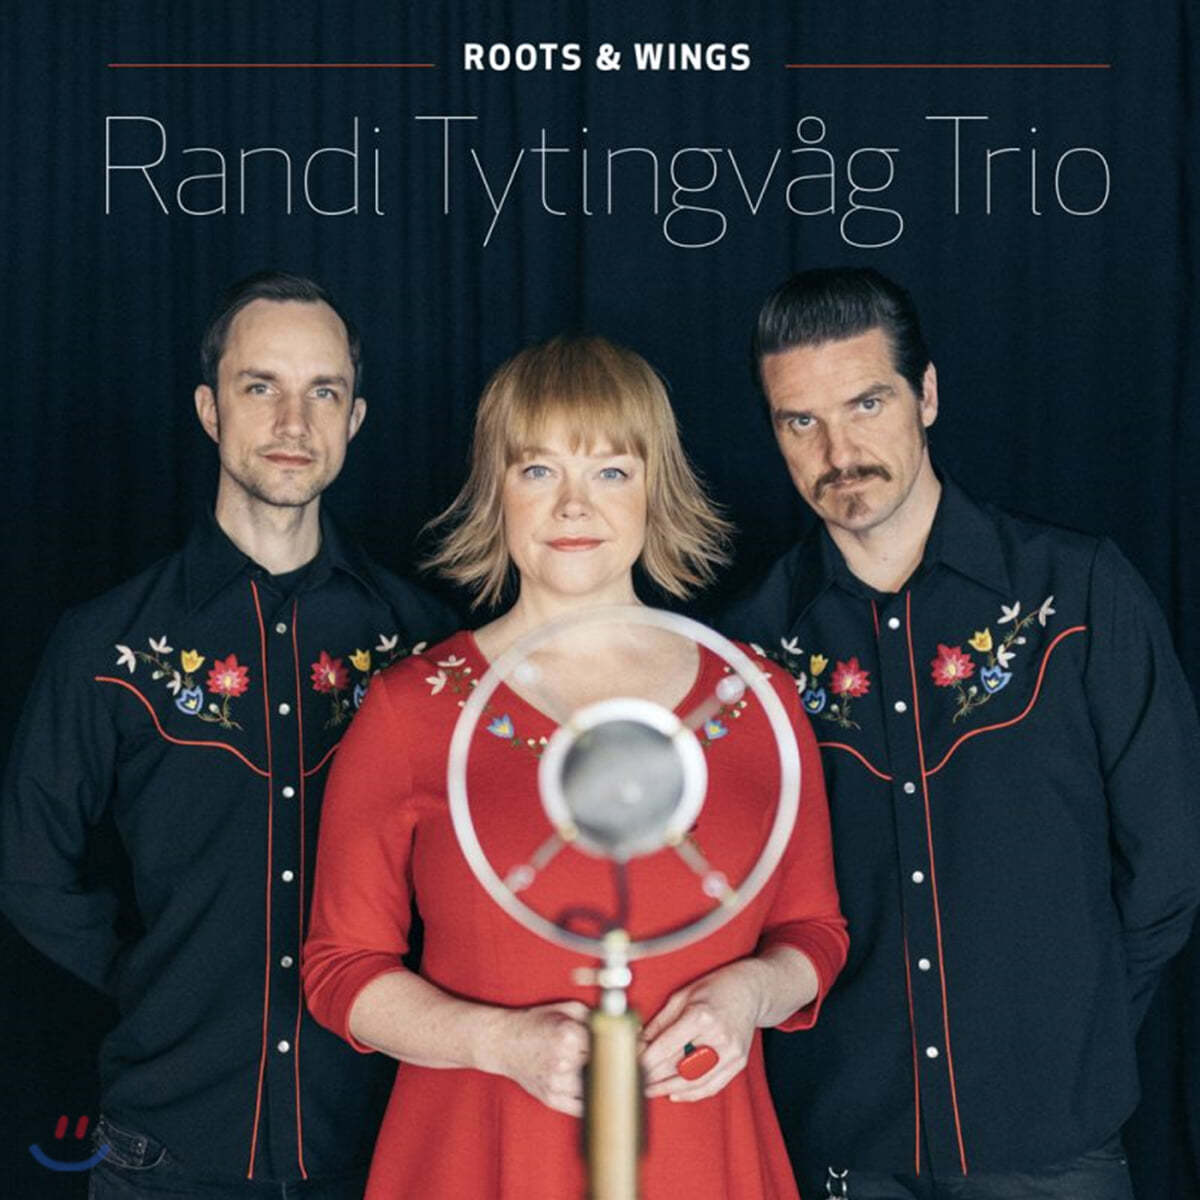 Randi Tytingvag Trio (란디 티팅보이 트리오) - Roots & Wings [LP]